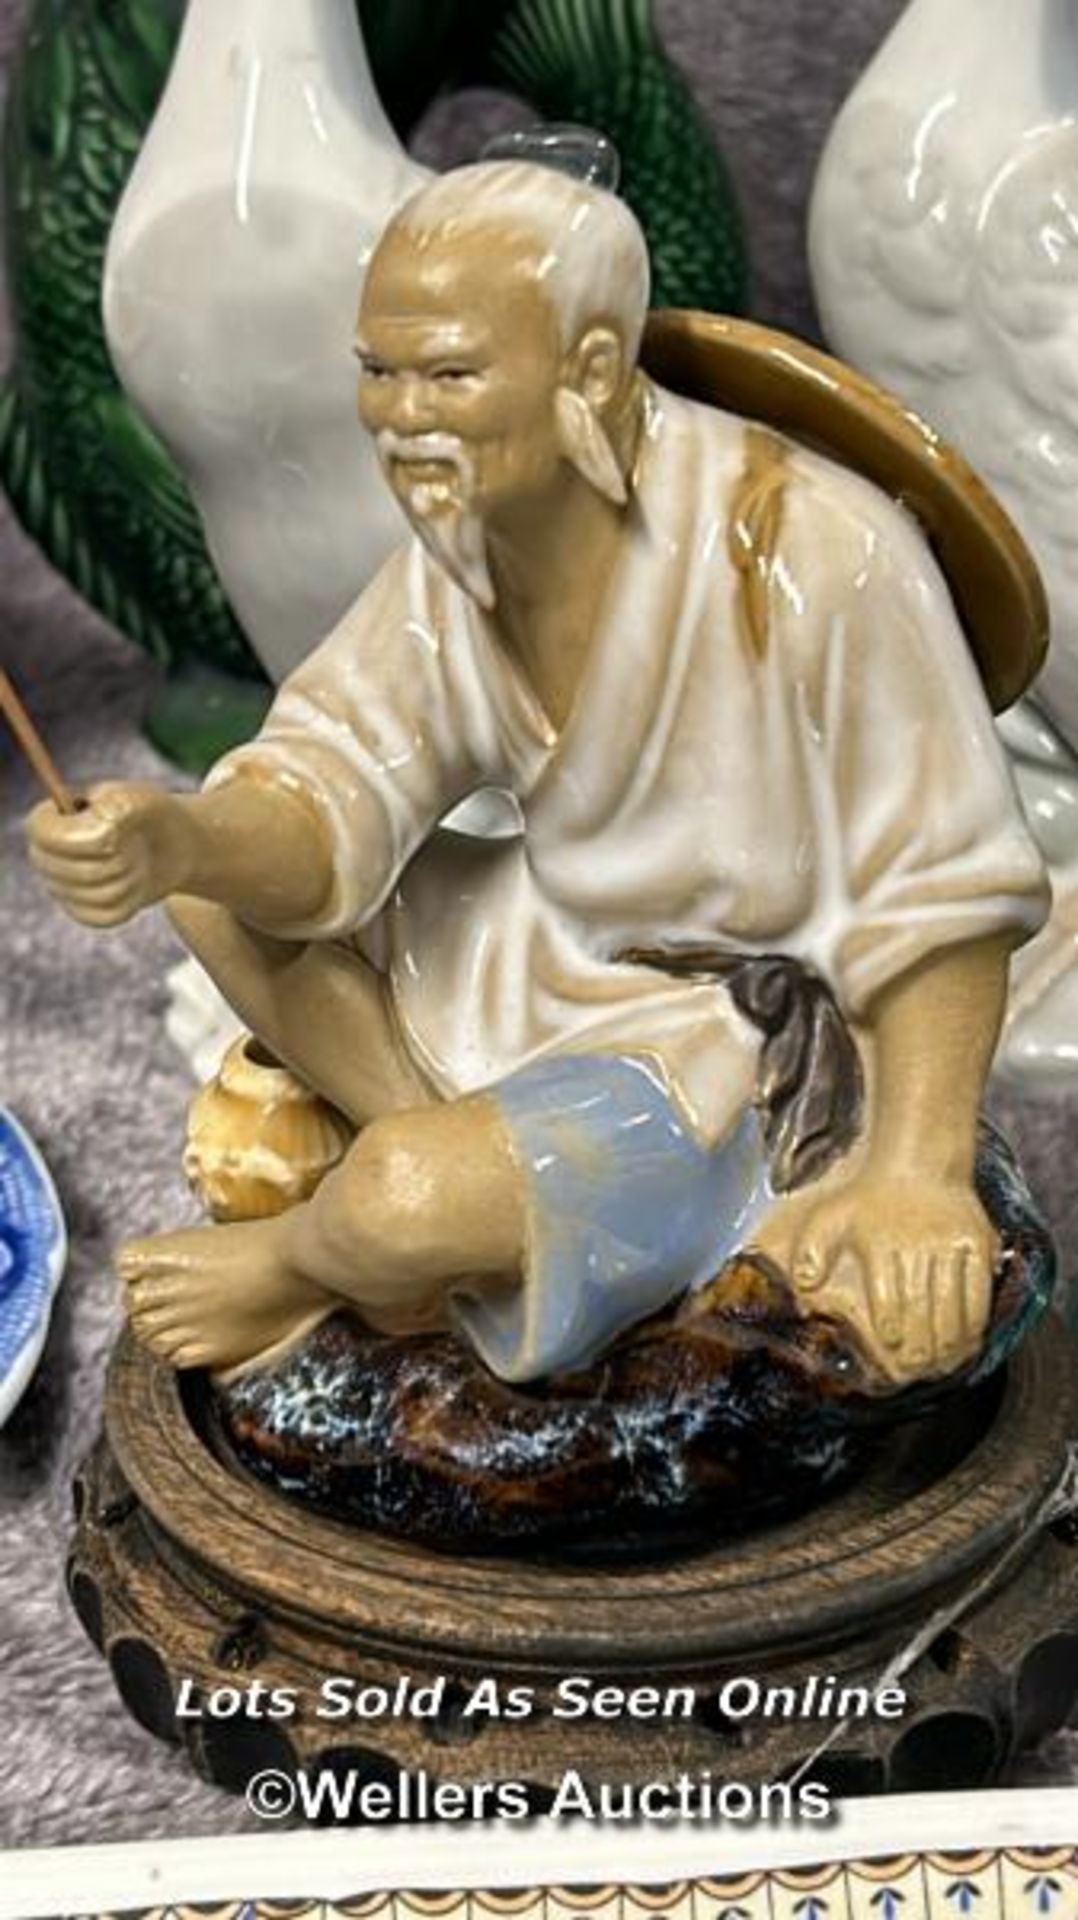 Assorted ceramics including Japanese fisherman figurine, Ducks, fish vase, Aynsley vases and trinket - Image 2 of 7